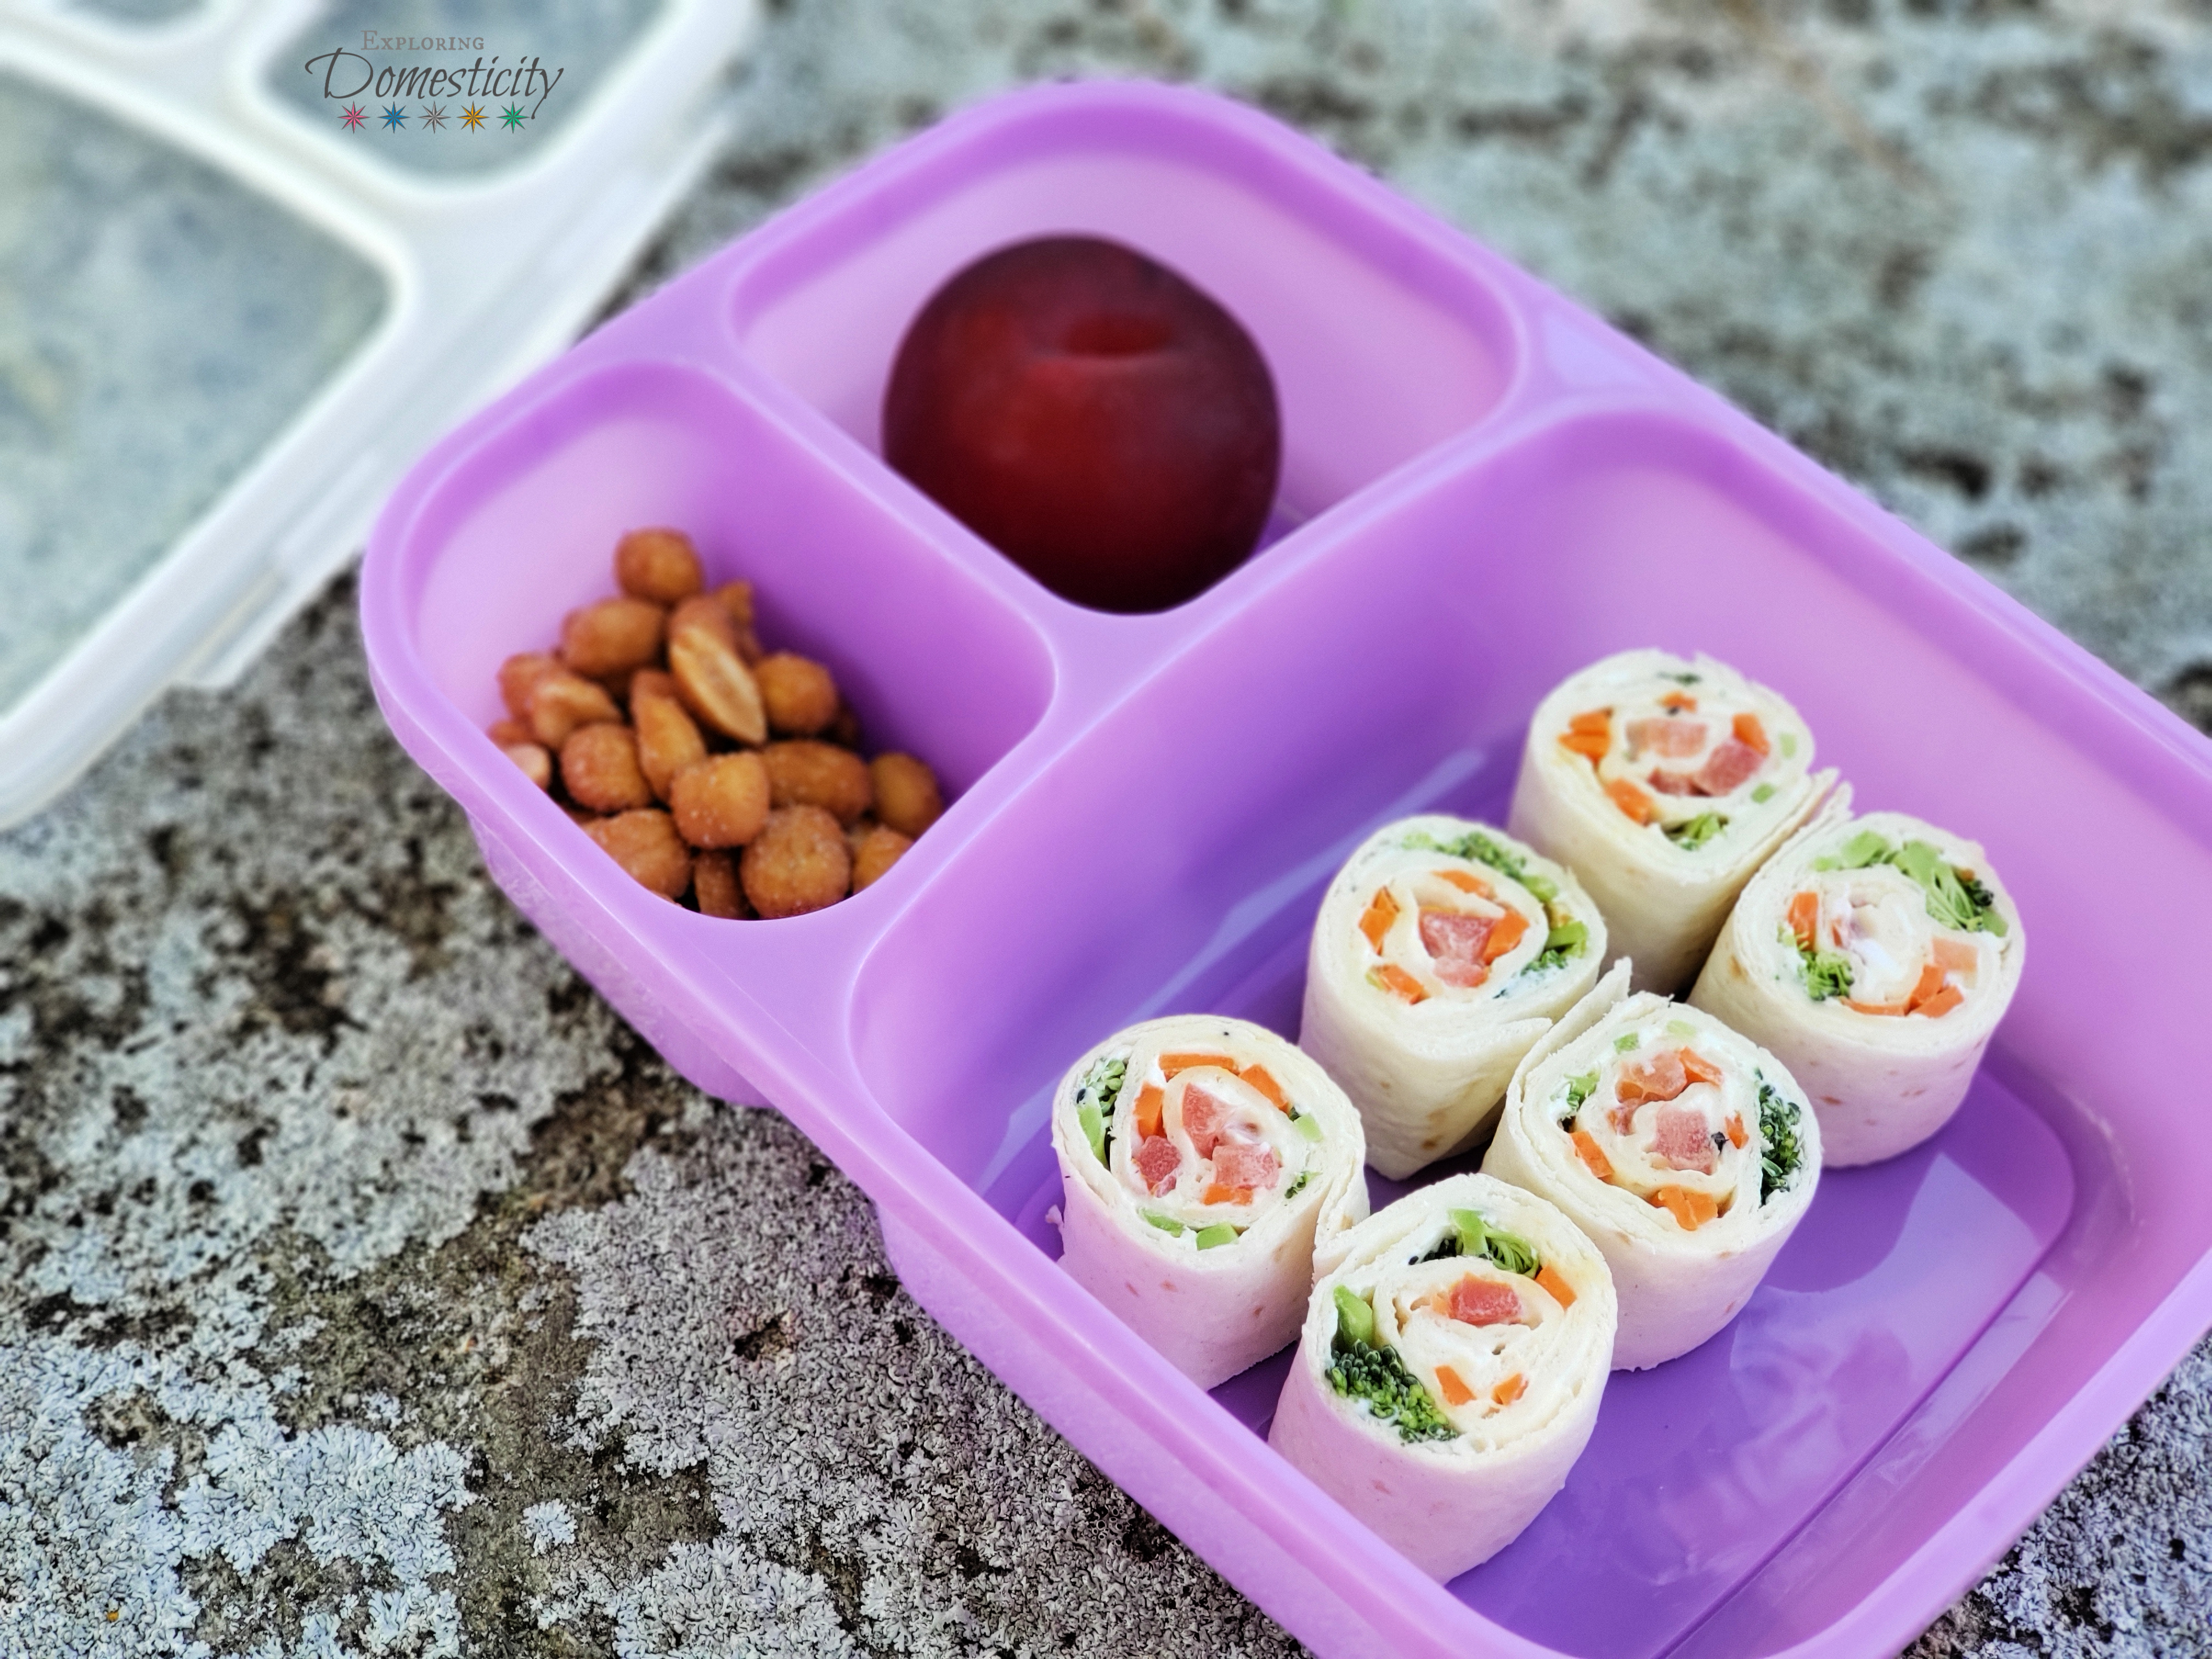 https://exploringdomesticity.com/wp-content/uploads/2019/08/Veggie-Pinwheel-Sandwich-Bento-Box-with-nuts-and-fruit-1.jpg